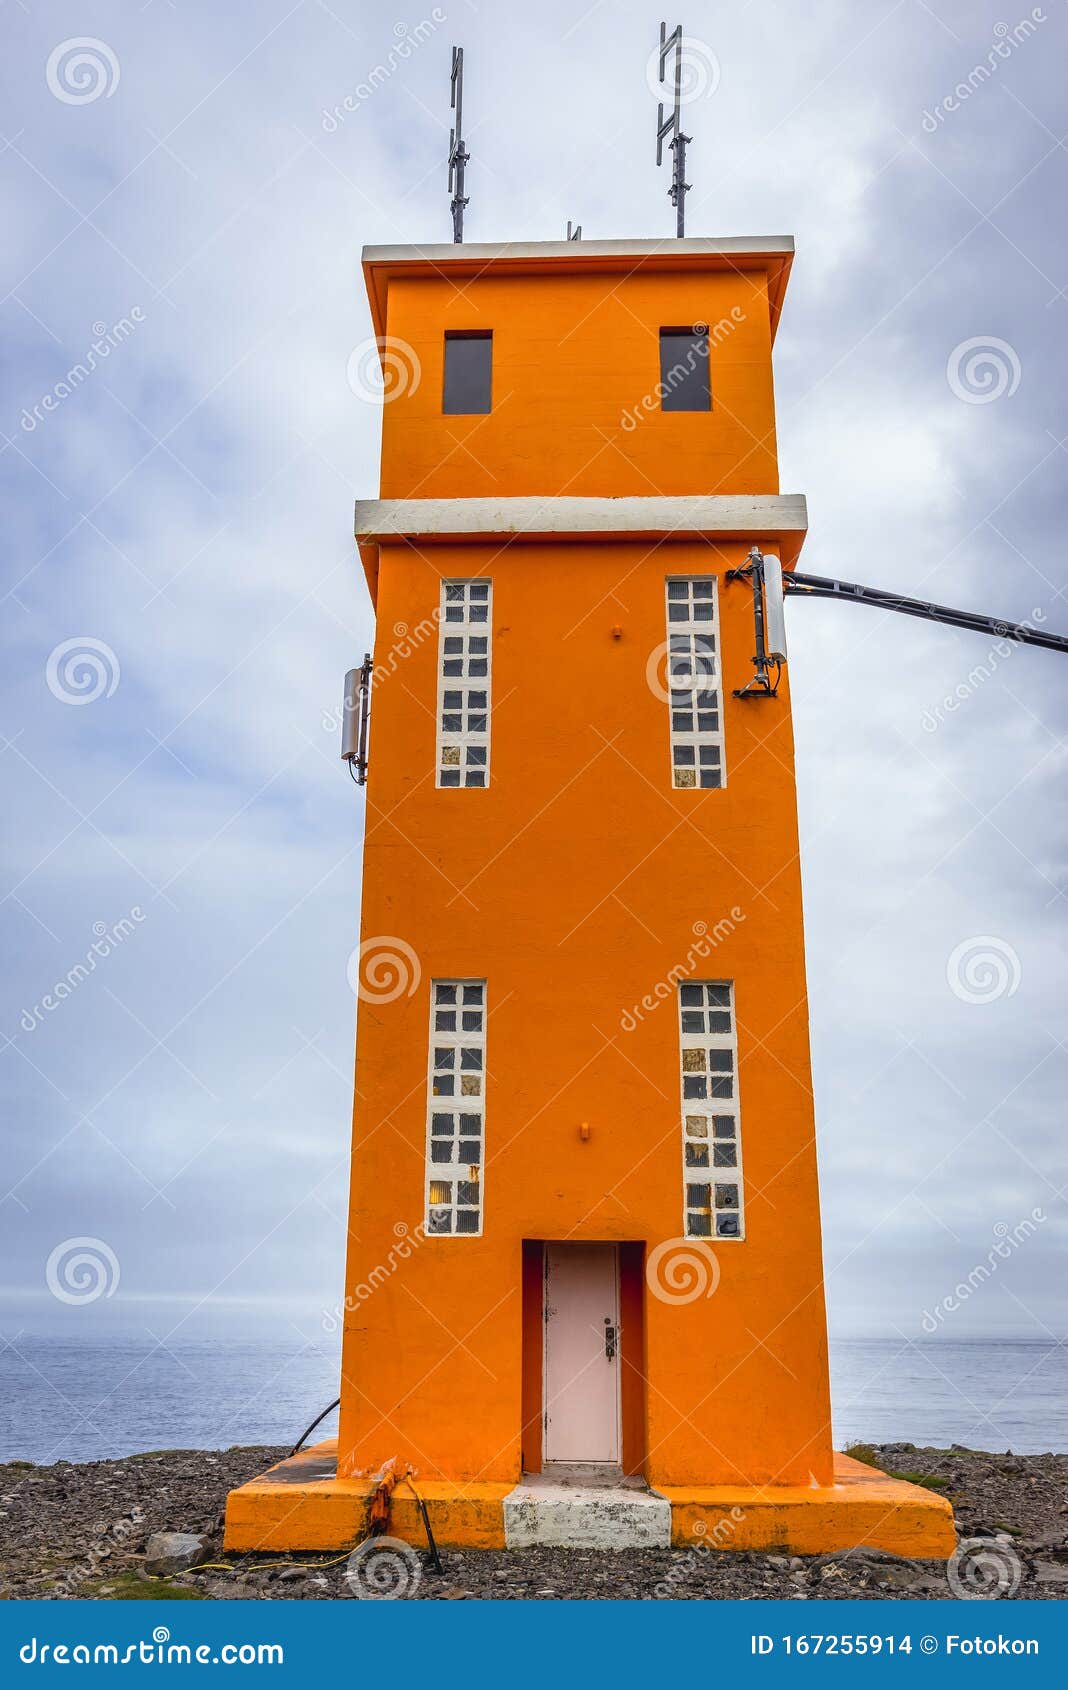 lighthouse-iceland-orange-building-hvalnes-located-peninsula-hornafjordur-hornafjorour-hvalnesviti-icelandic-architecture-167255914.jpg